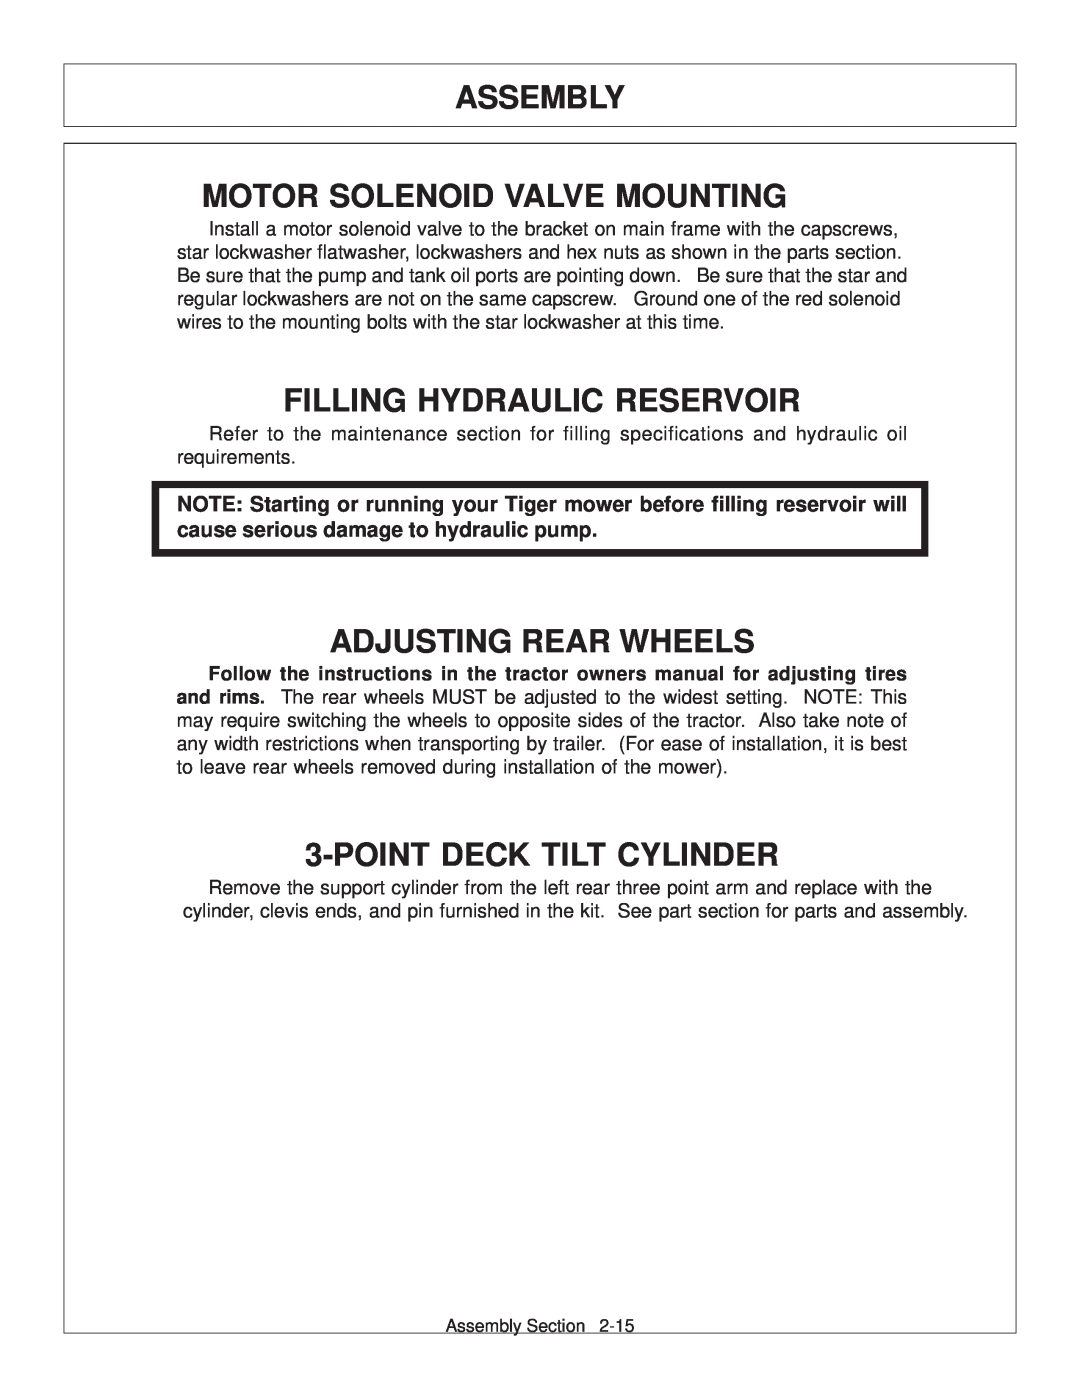 Tiger Products Co., Ltd JD 72-7520 manual Motor Solenoid Valve Mounting, Filling Hydraulic Reservoir, Adjusting Rear Wheels 